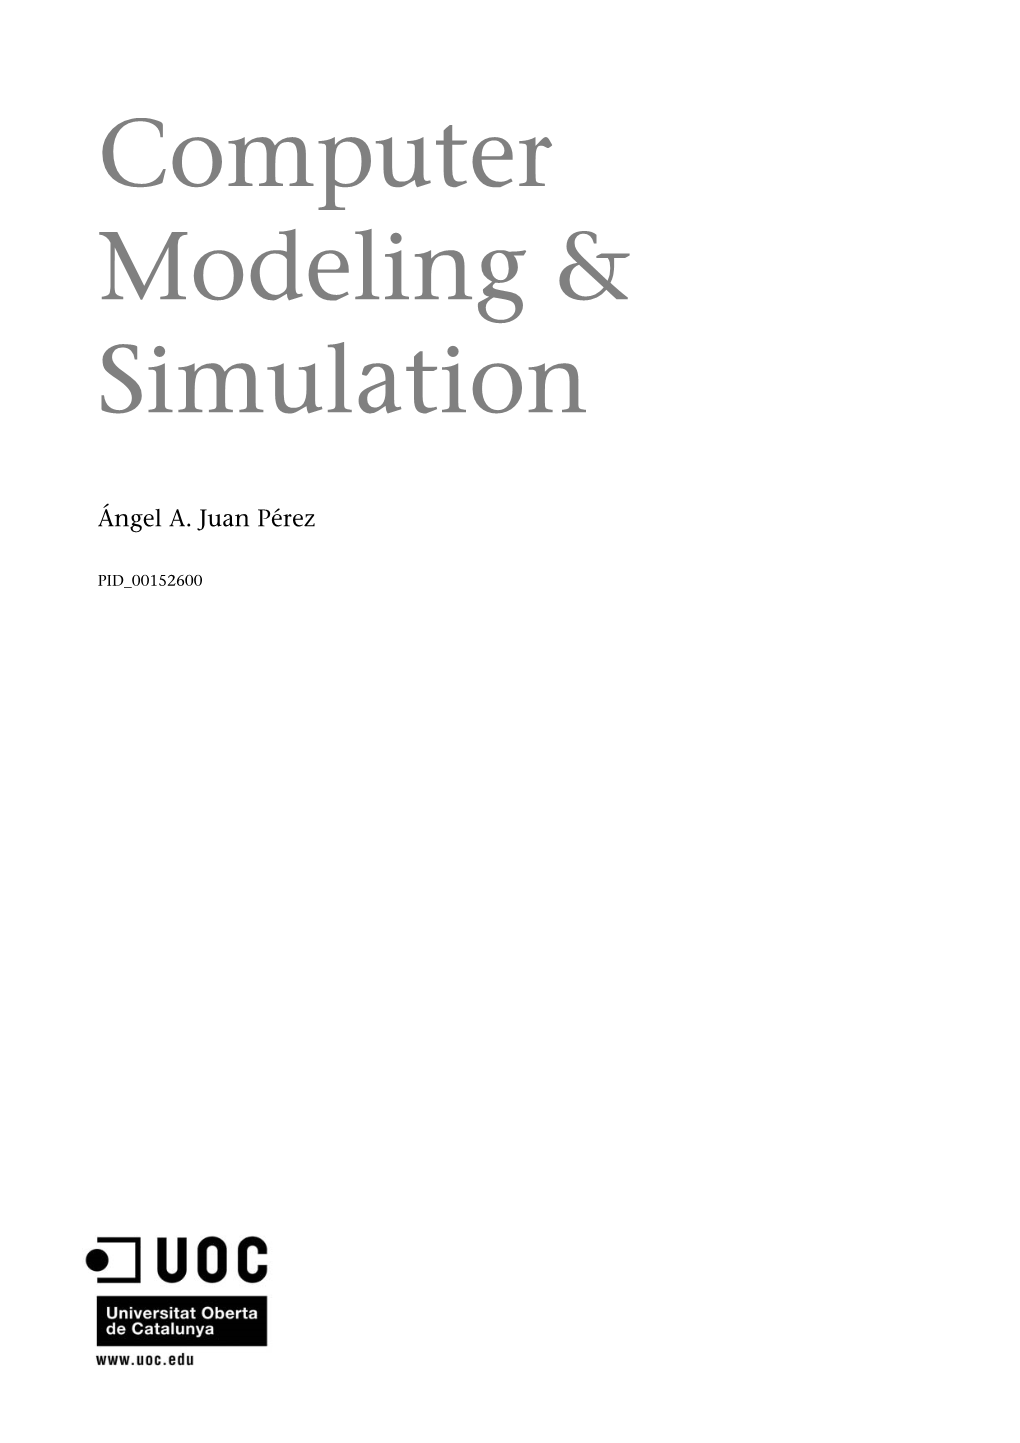 Computer Modeling & Simulation.Pdf